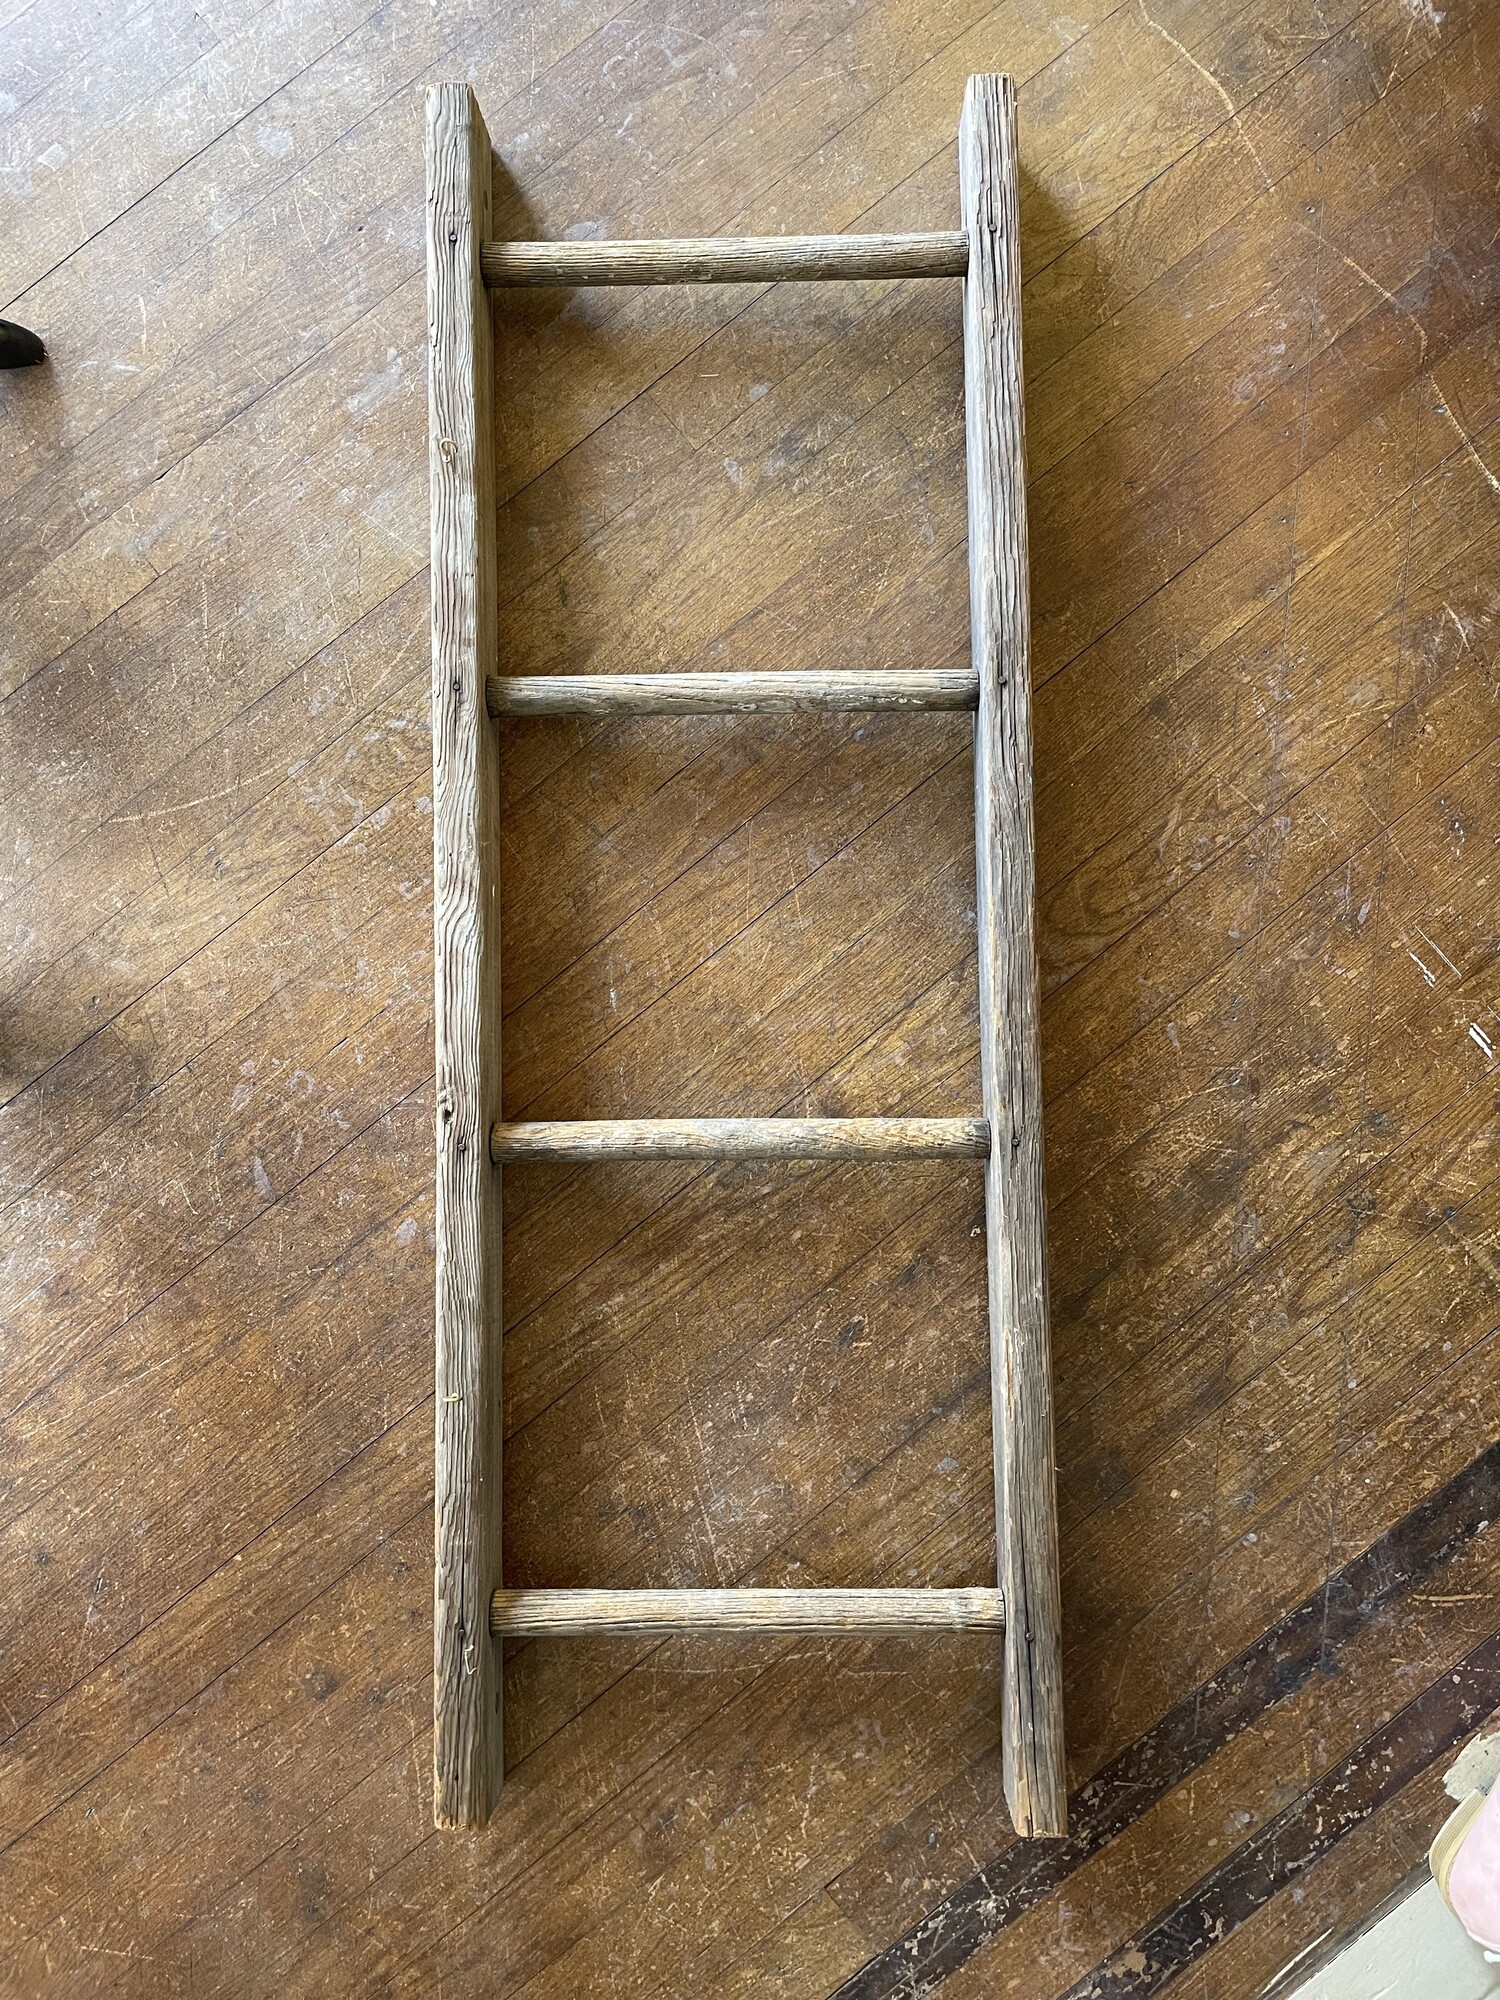 Wooden Ladder Wall Decor
Wood
Size: 45x16